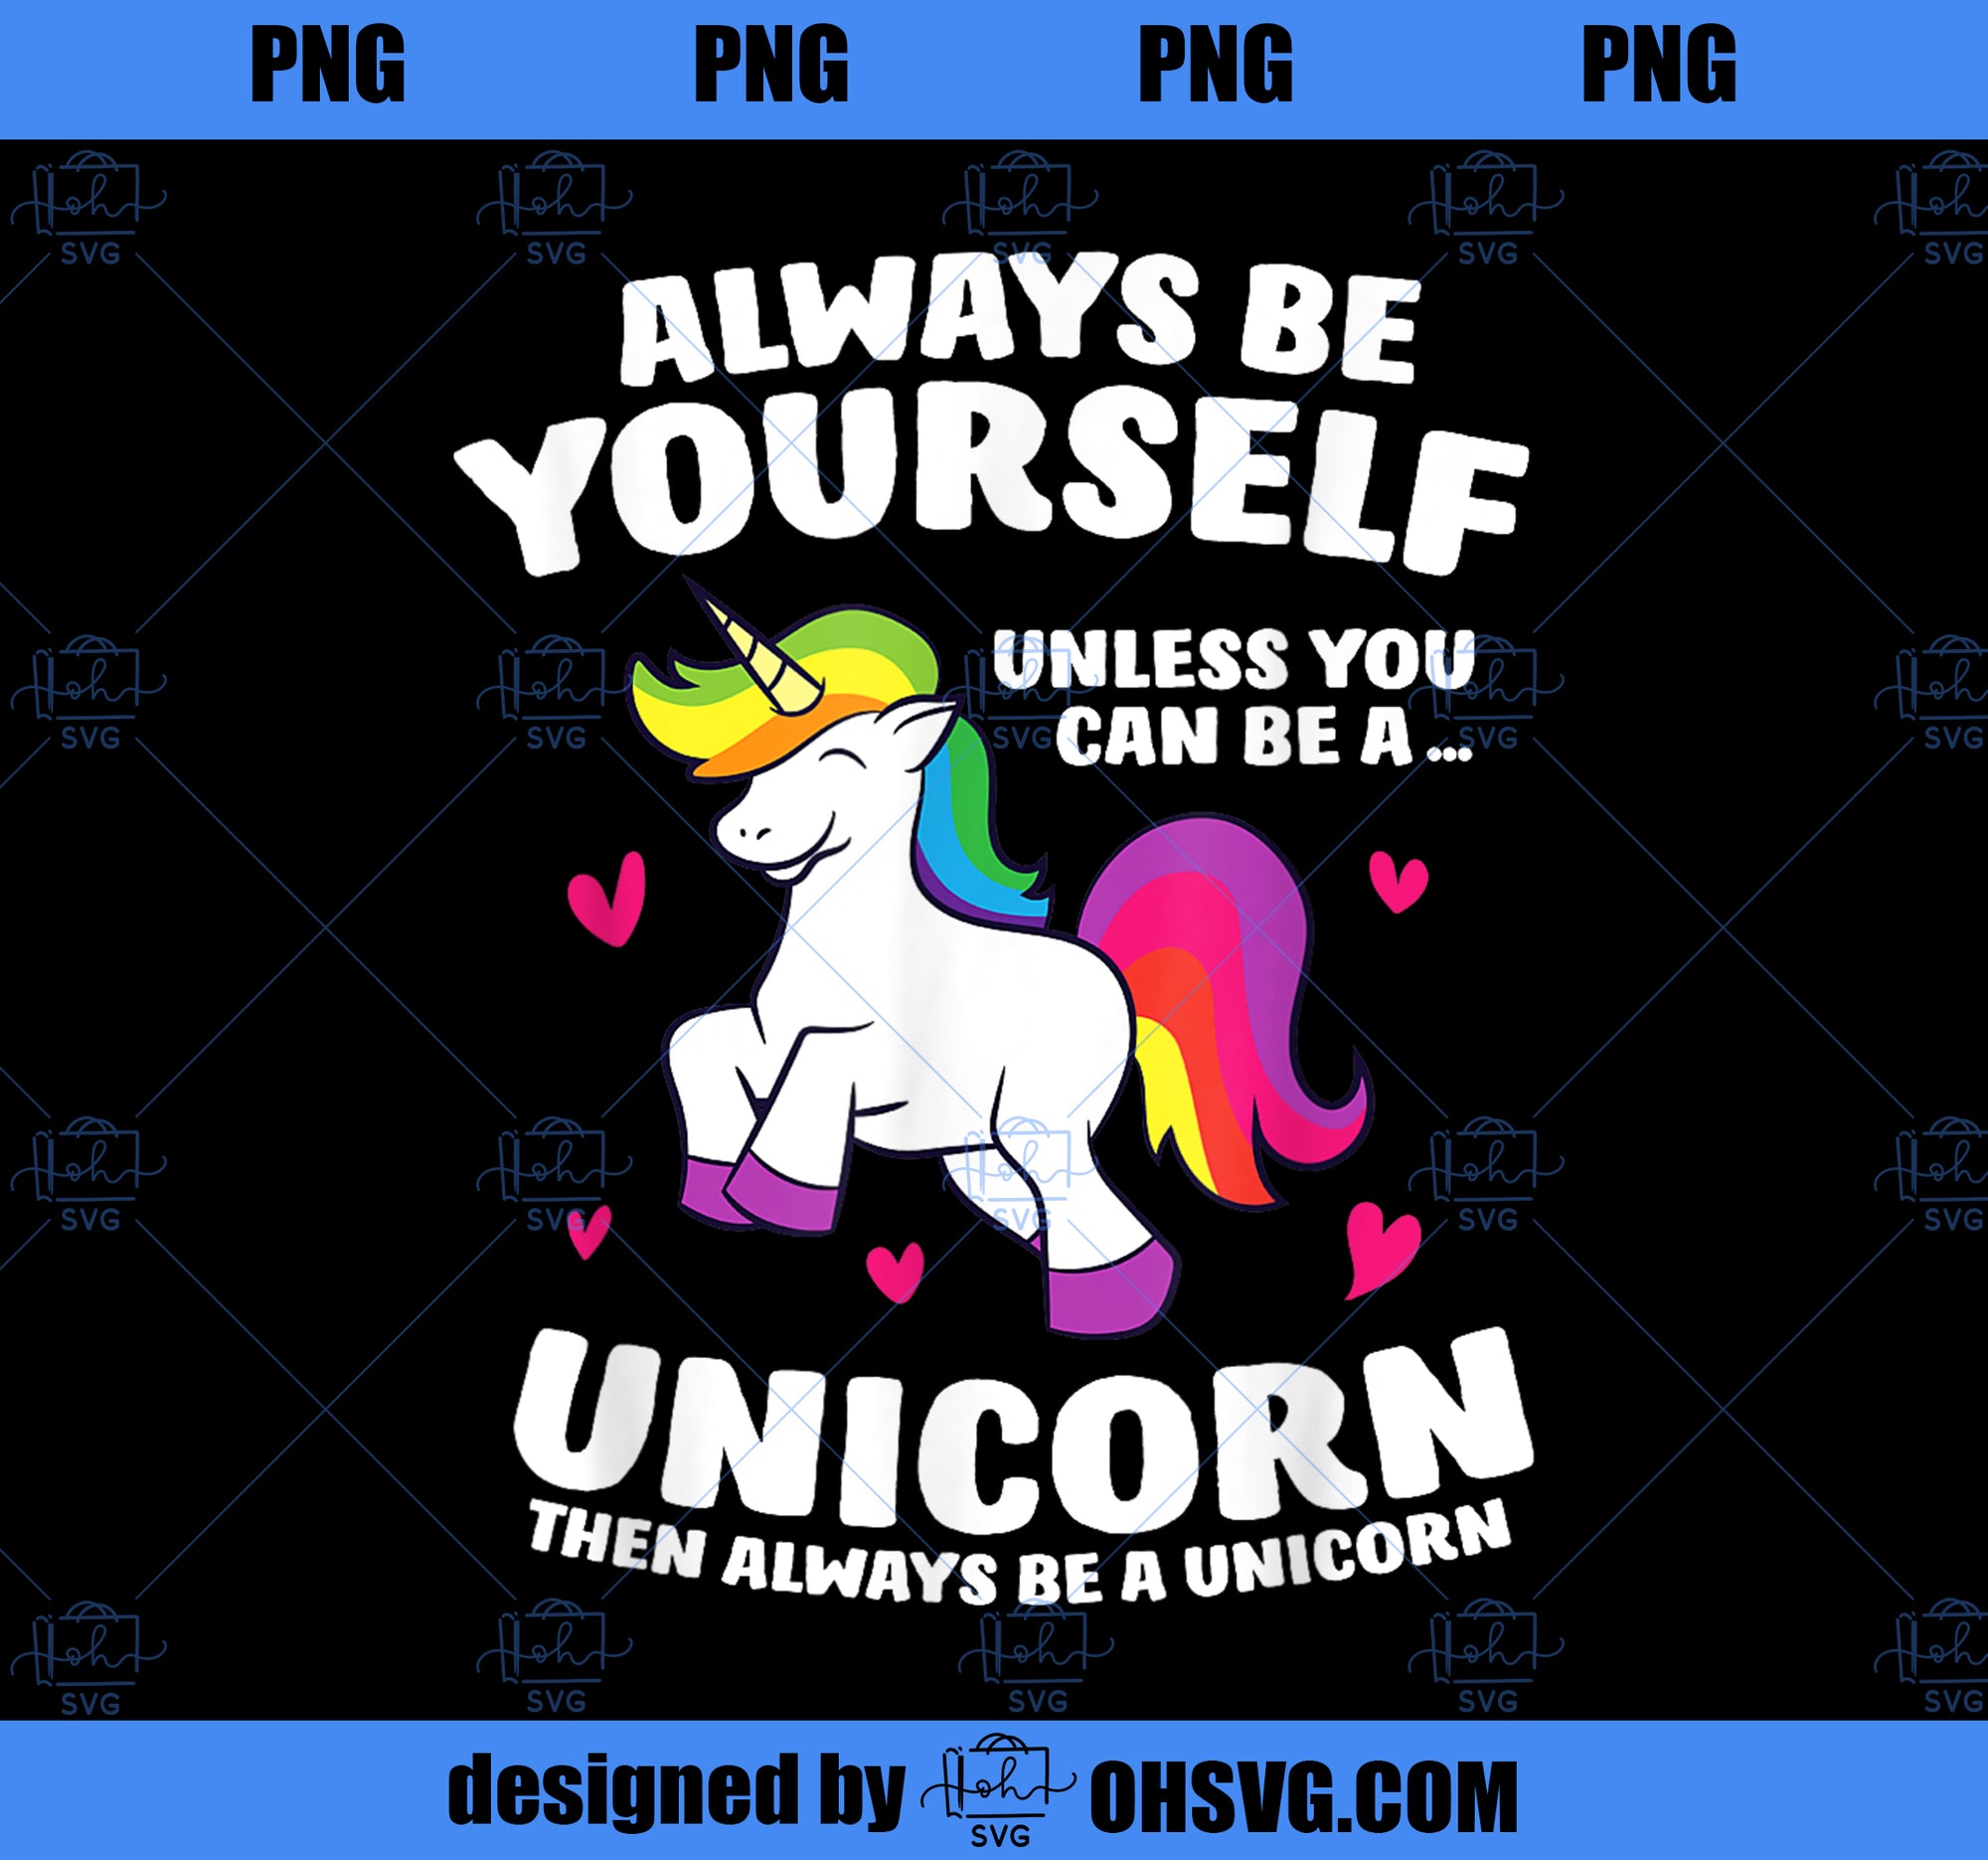 Funny Unicorn Always Be Yourself Unless You Can Be A Unicorn PNG, Magic Unicorn PNG, Unicorn PNG